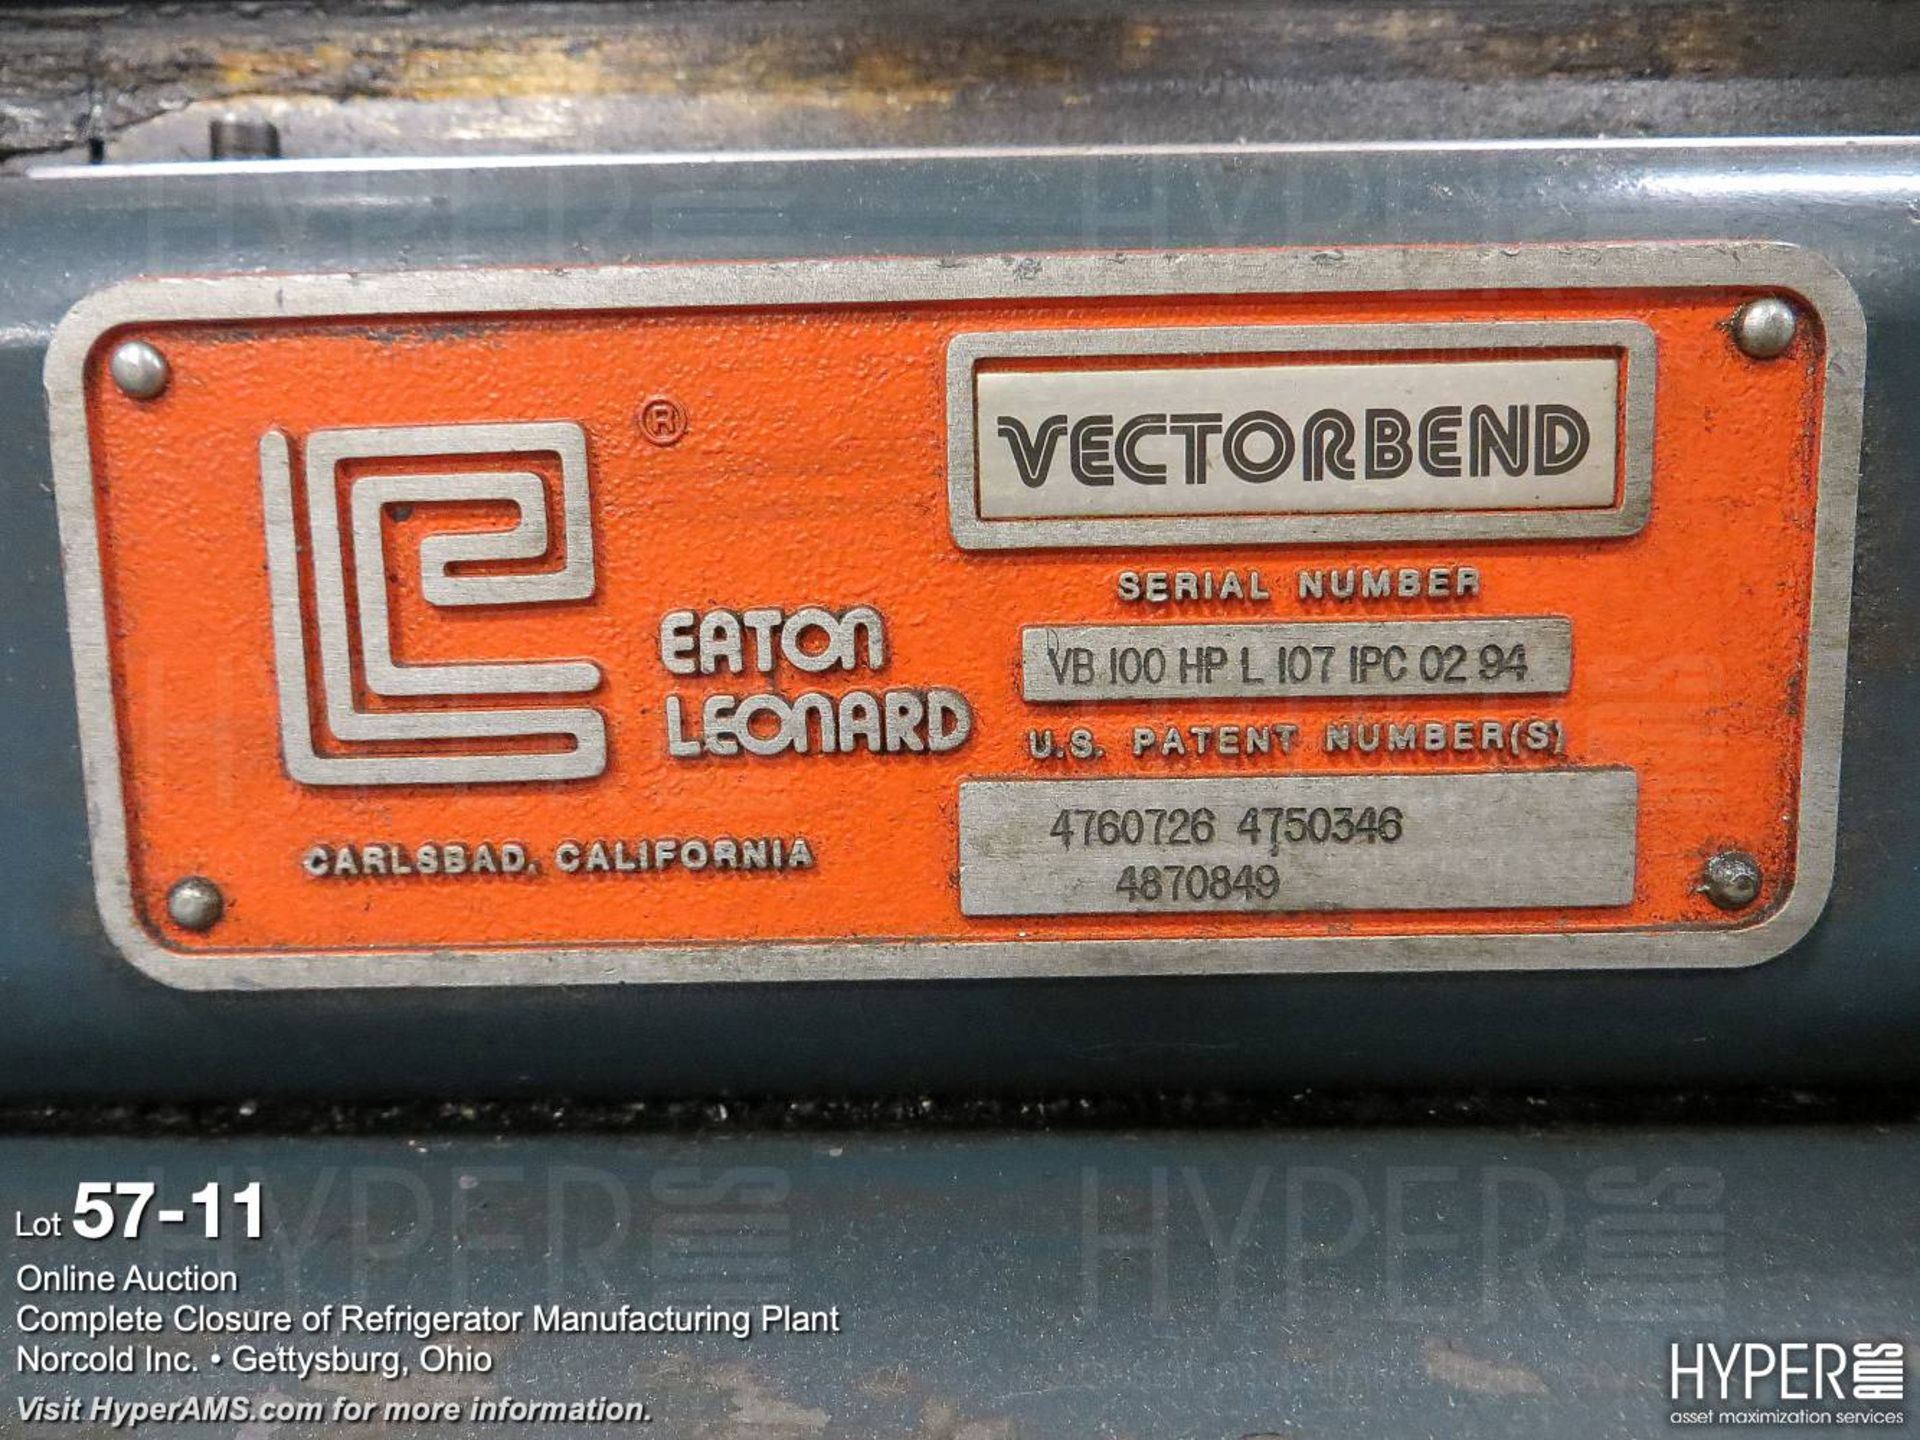 Eaton Leonard VB100 Vectorbend CNC tube bender - Image 11 of 12